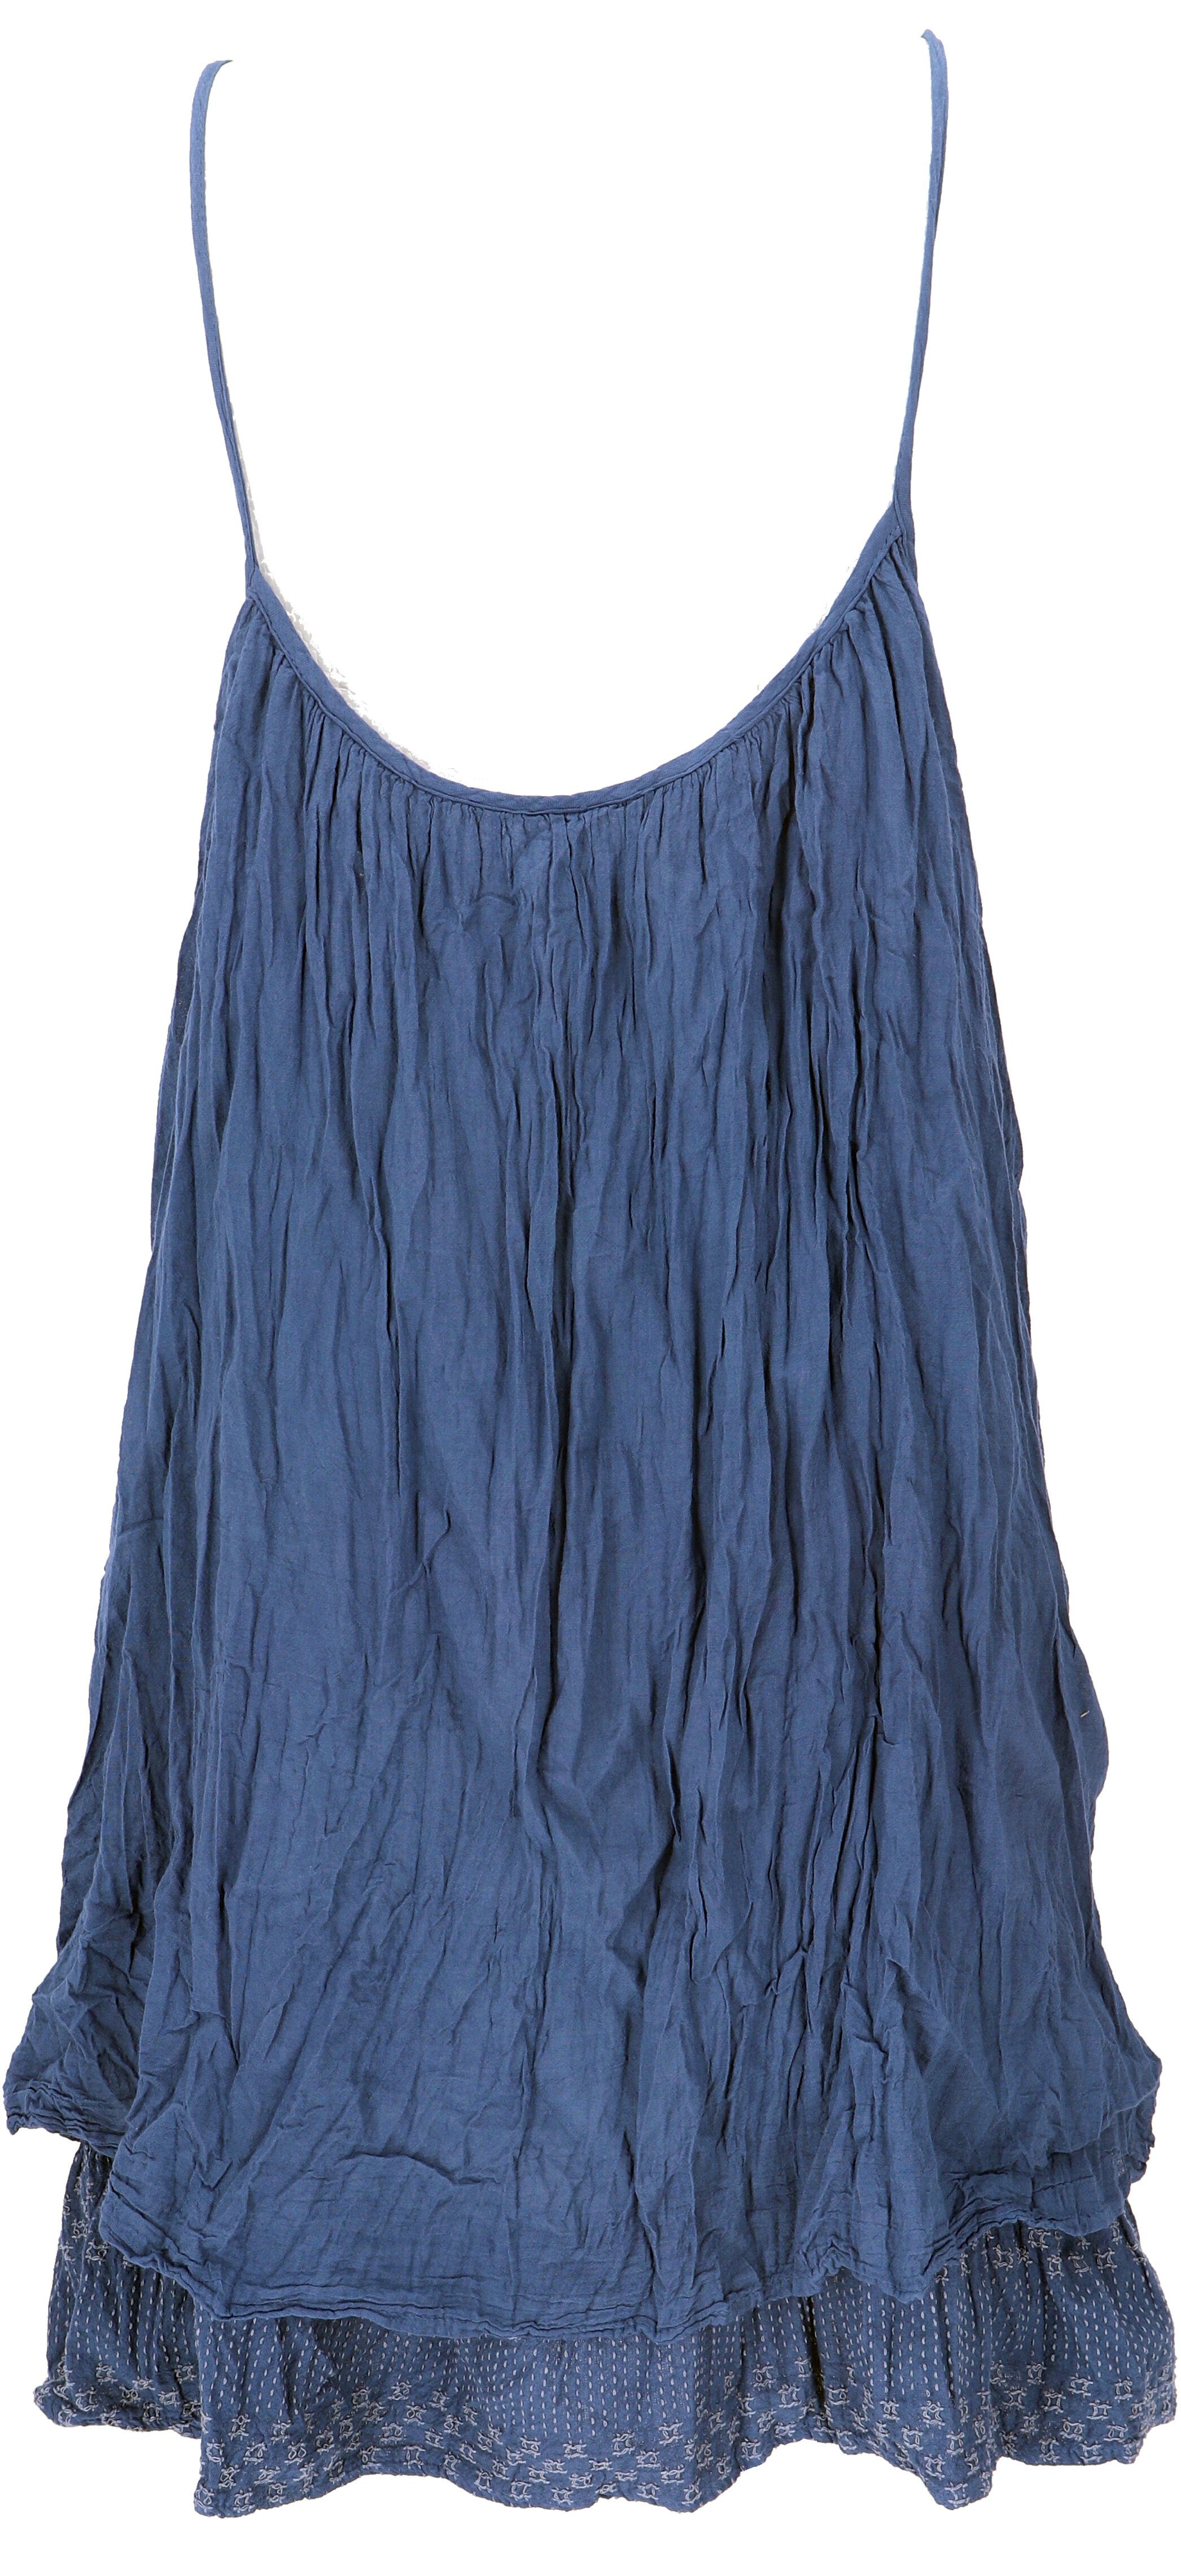 Bekleidung alternative Guru-Shop Sommerkleid,.. blau Boho Minikleid, Midikleid Krinkelkleid,